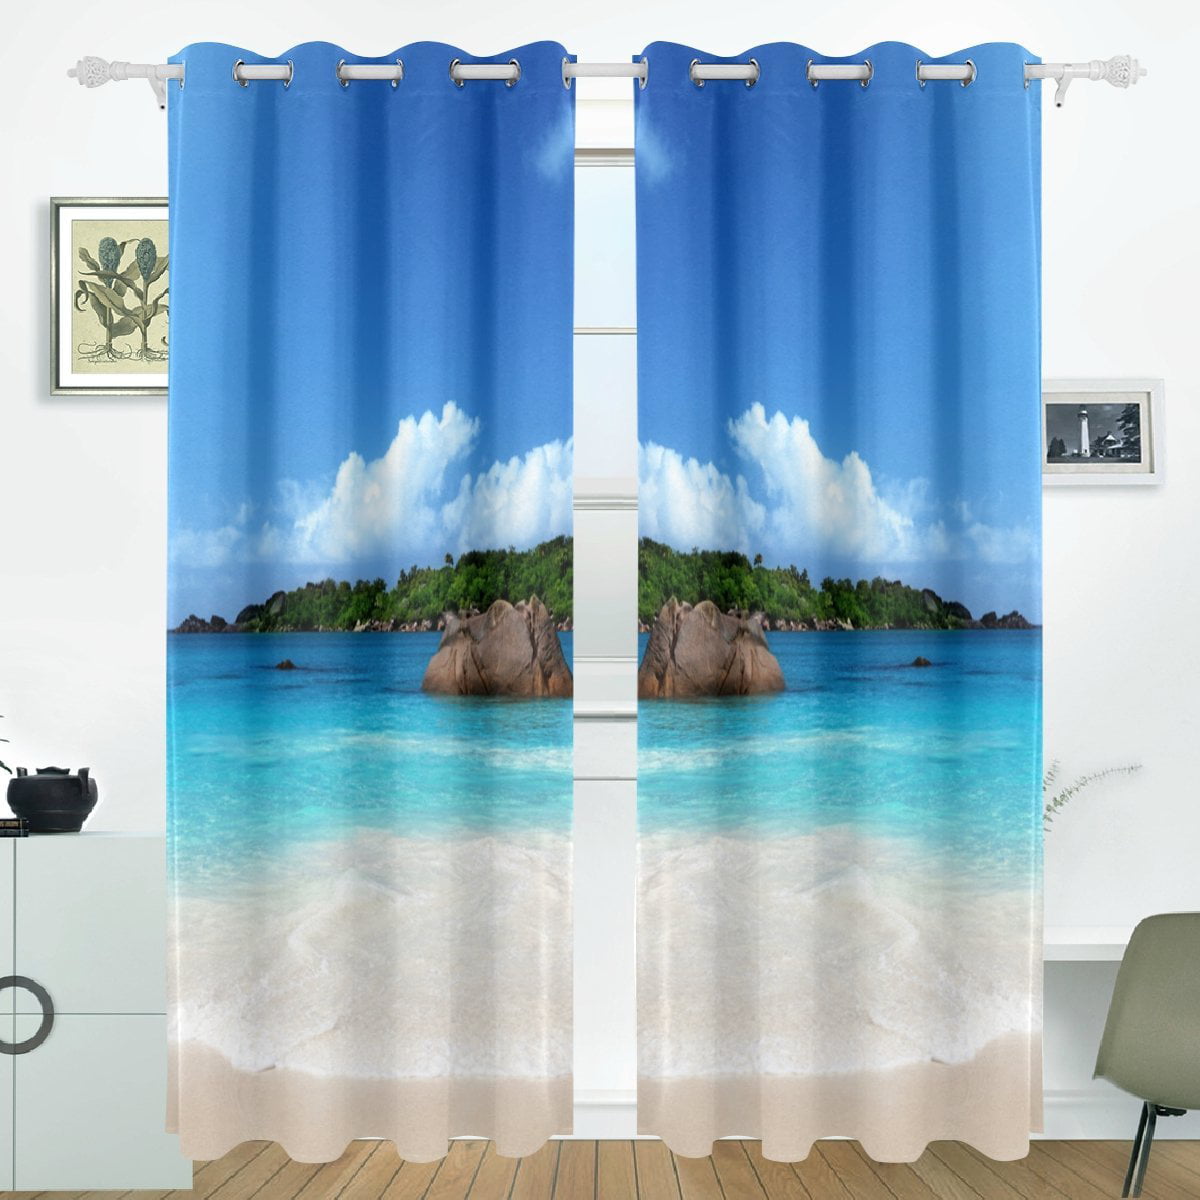 Sunny Beach Blue Ocean 3D Photo Printing Window Curtains Blockout Drapes Fabric 